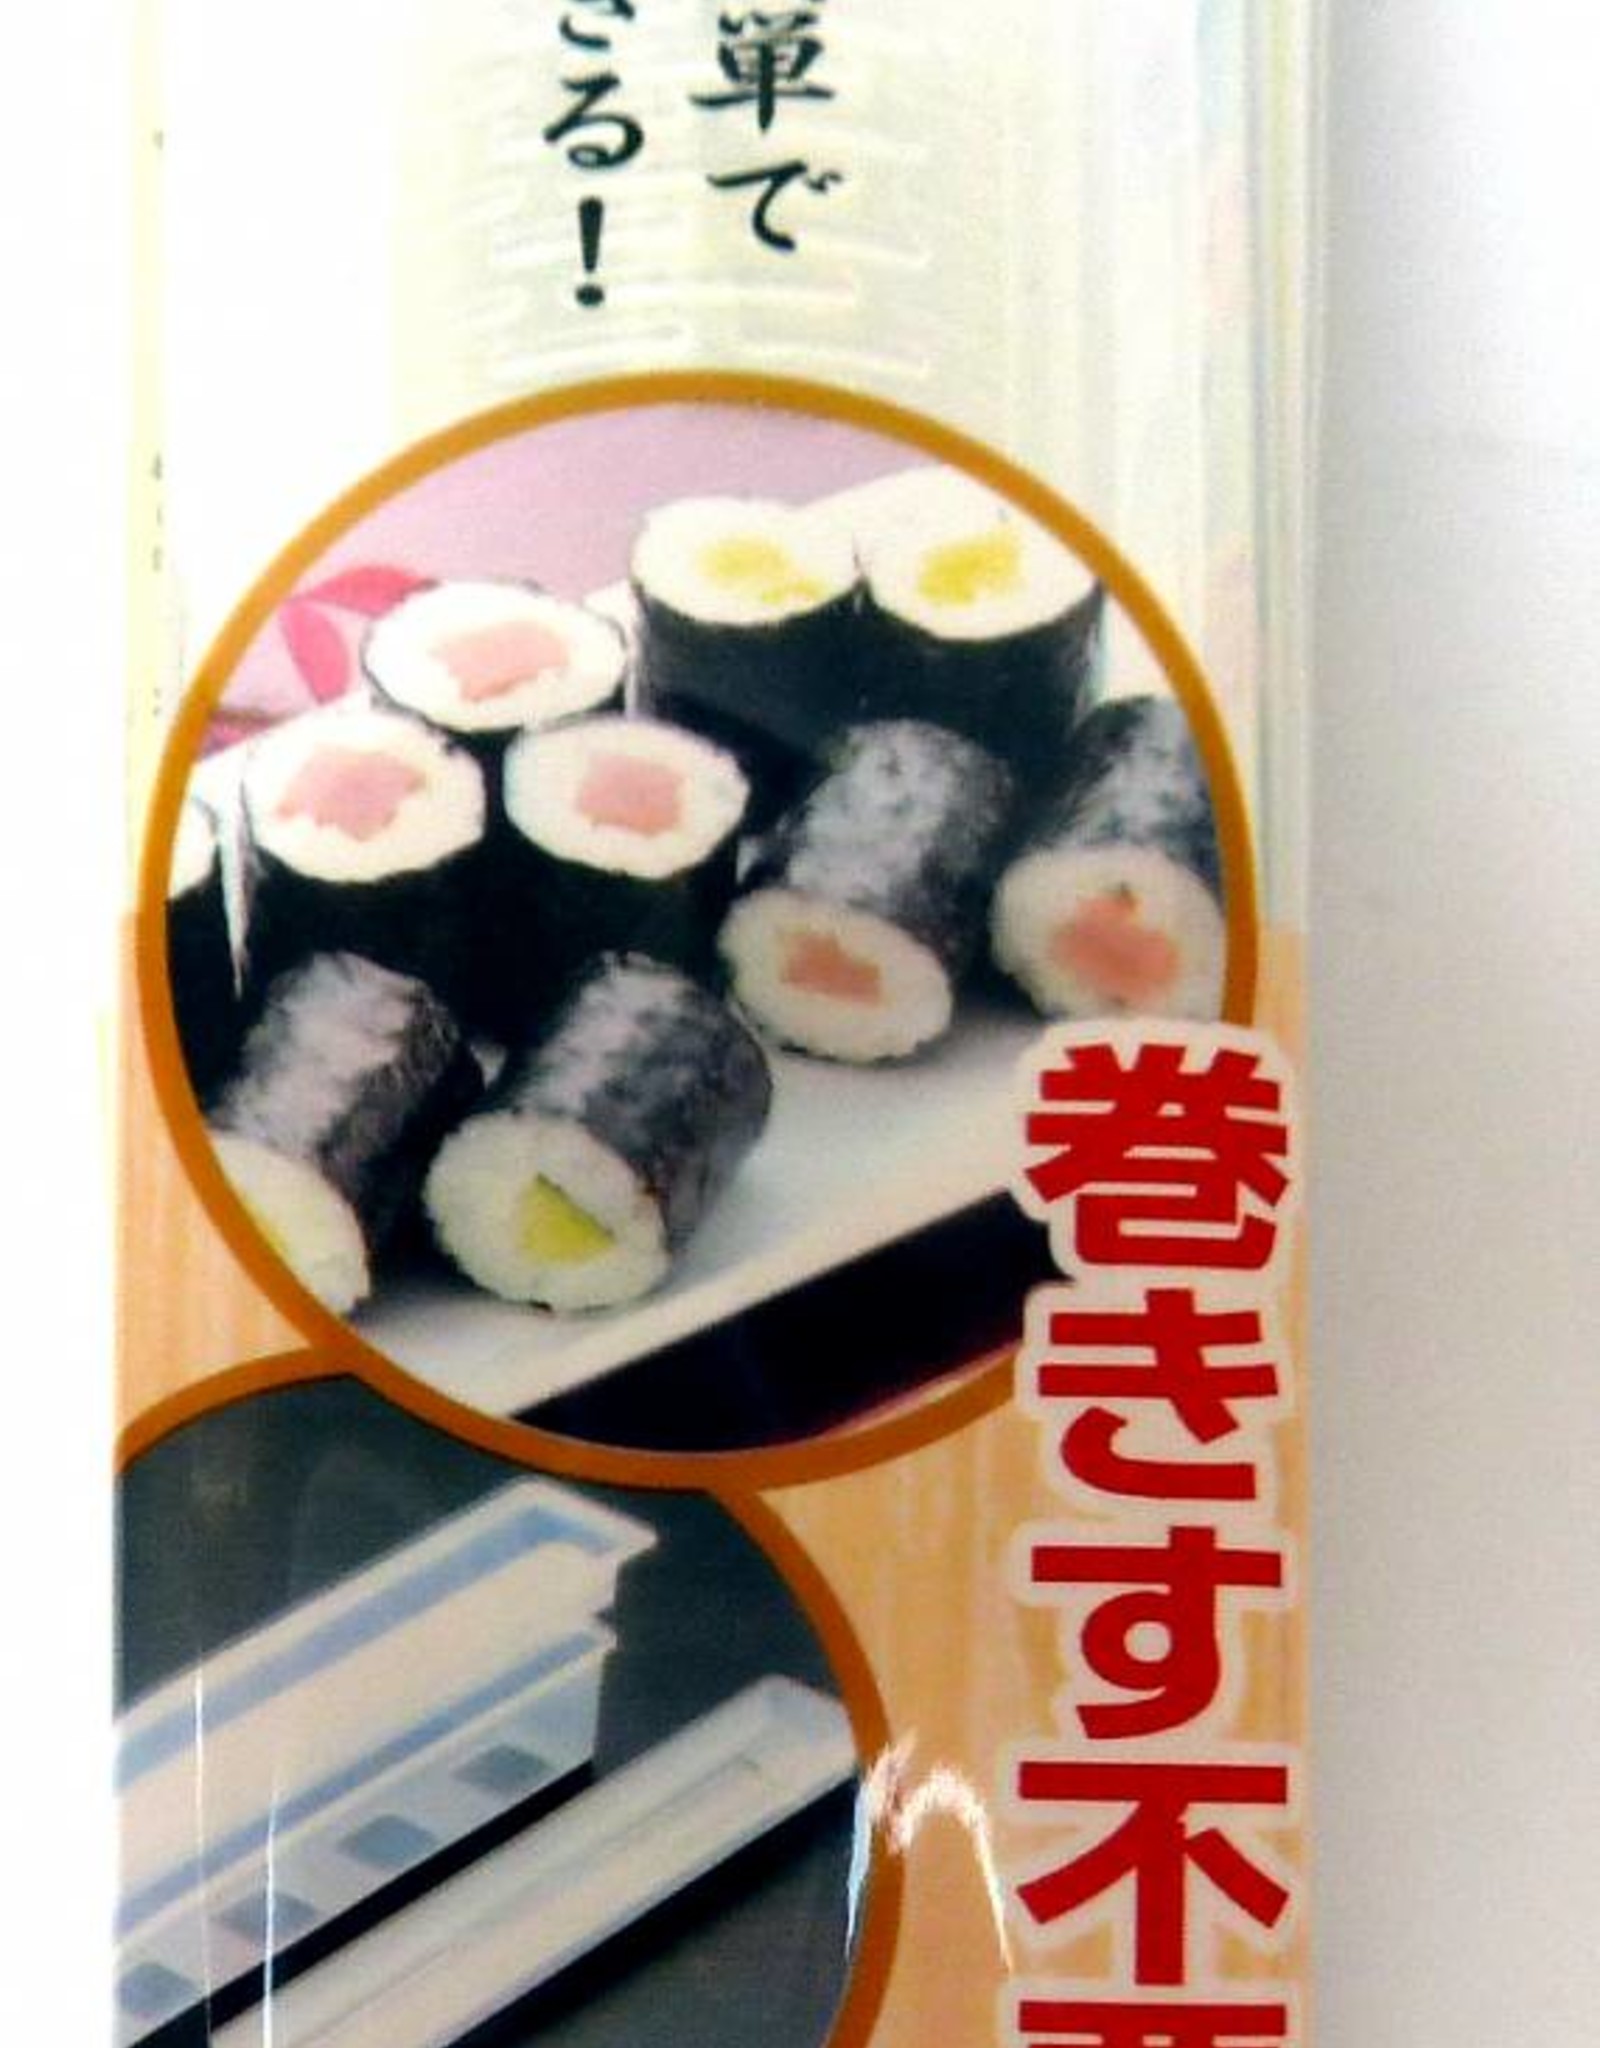 Hosomaki form (thin sushi roll)